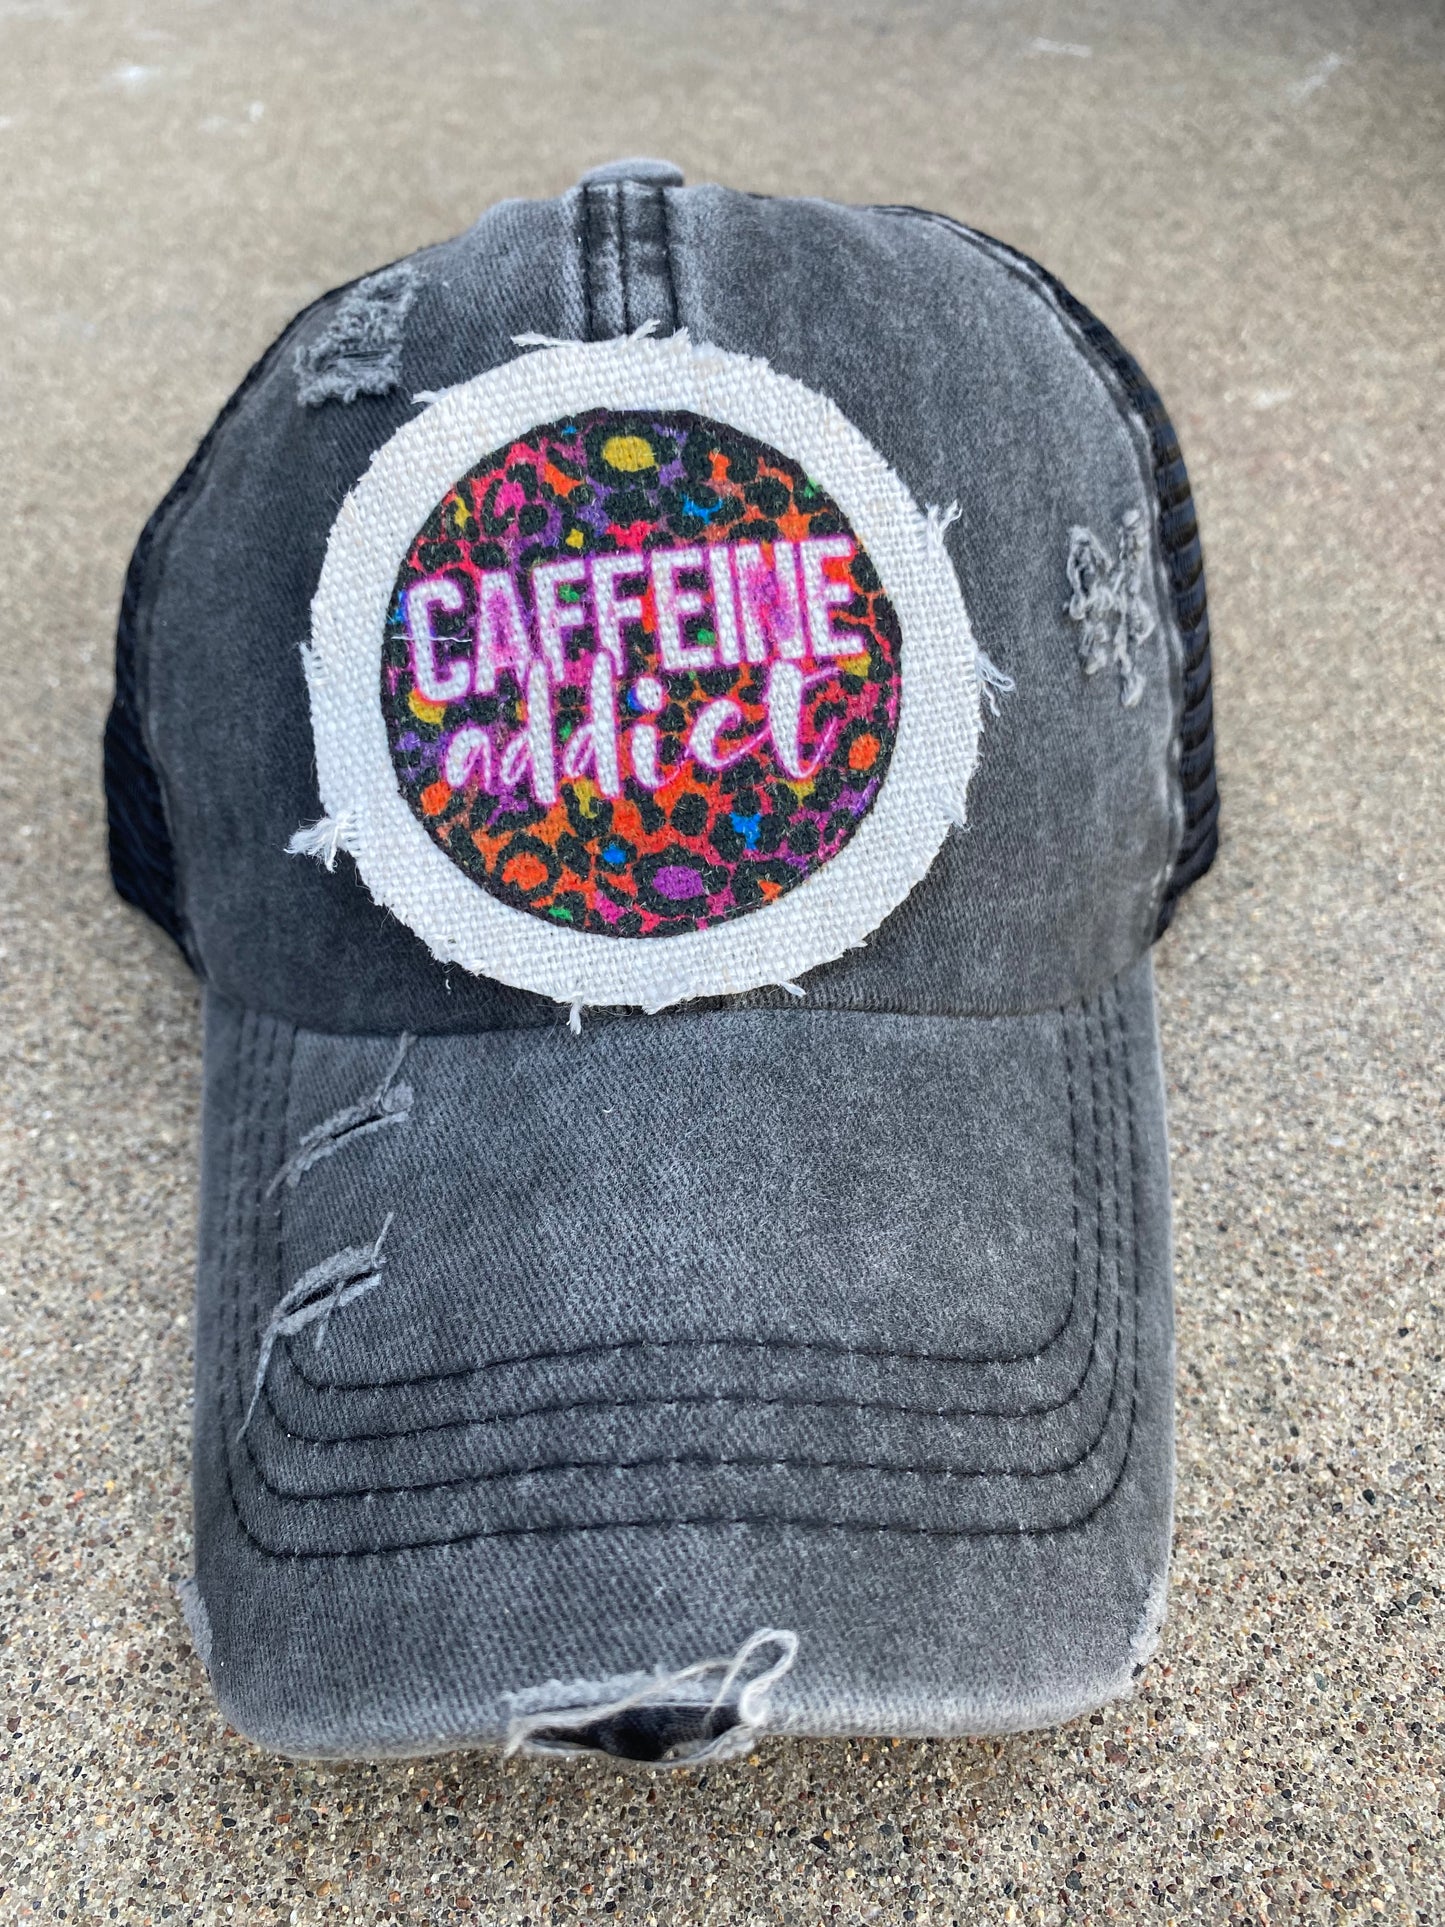 Caffeine Addict Circle Hat Patch